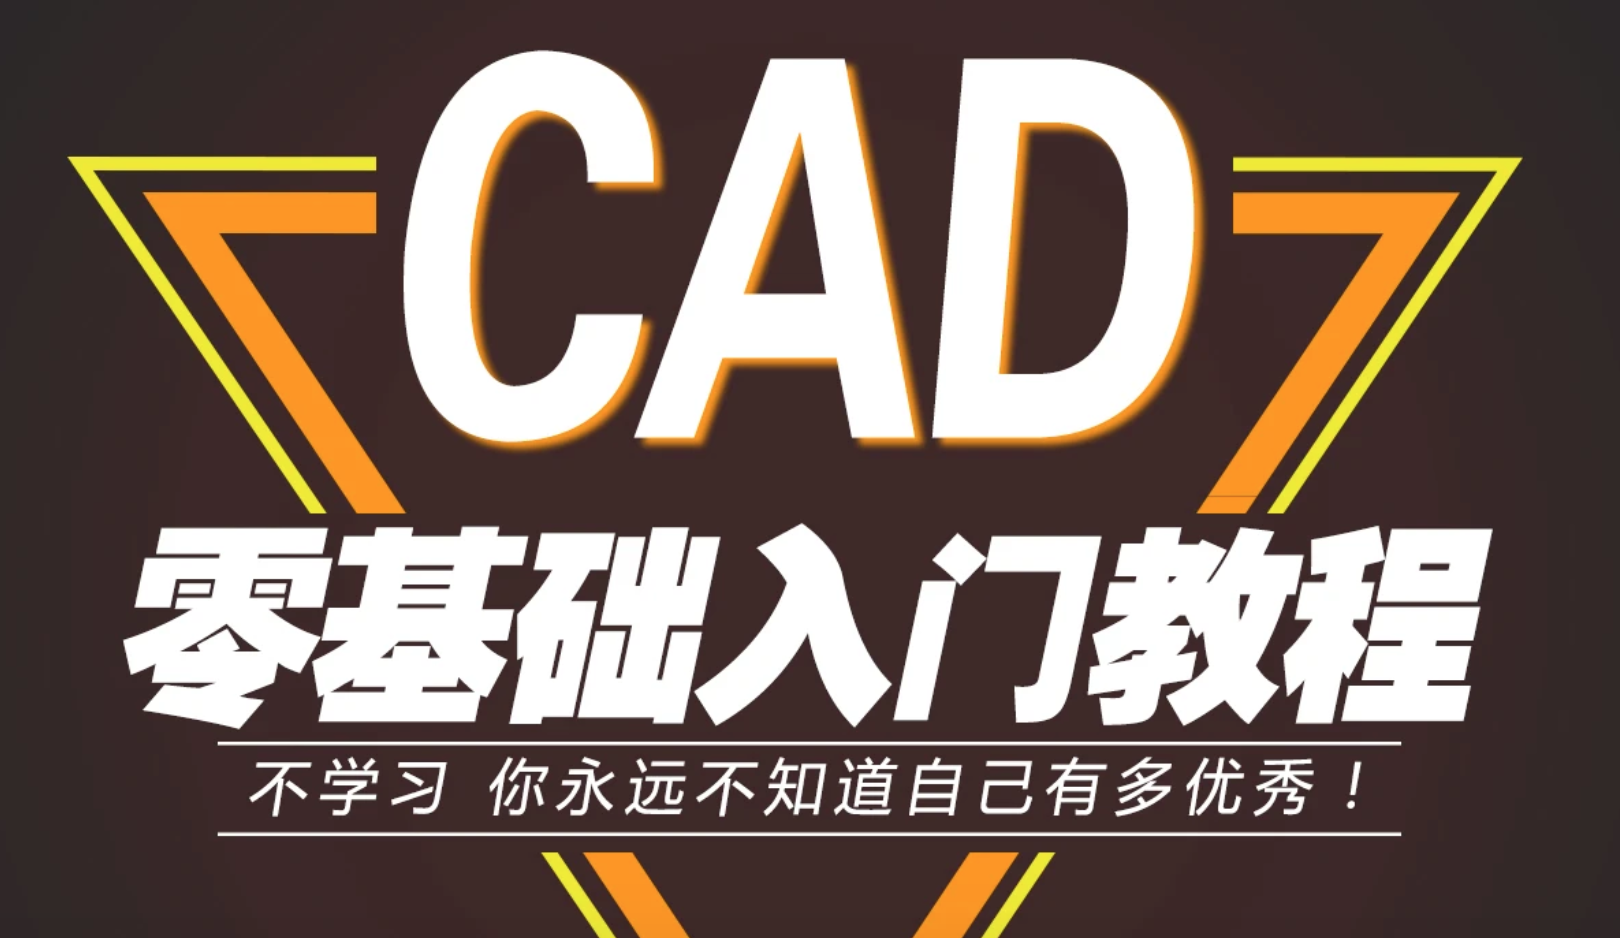 Auto CAD 零基础入门教程